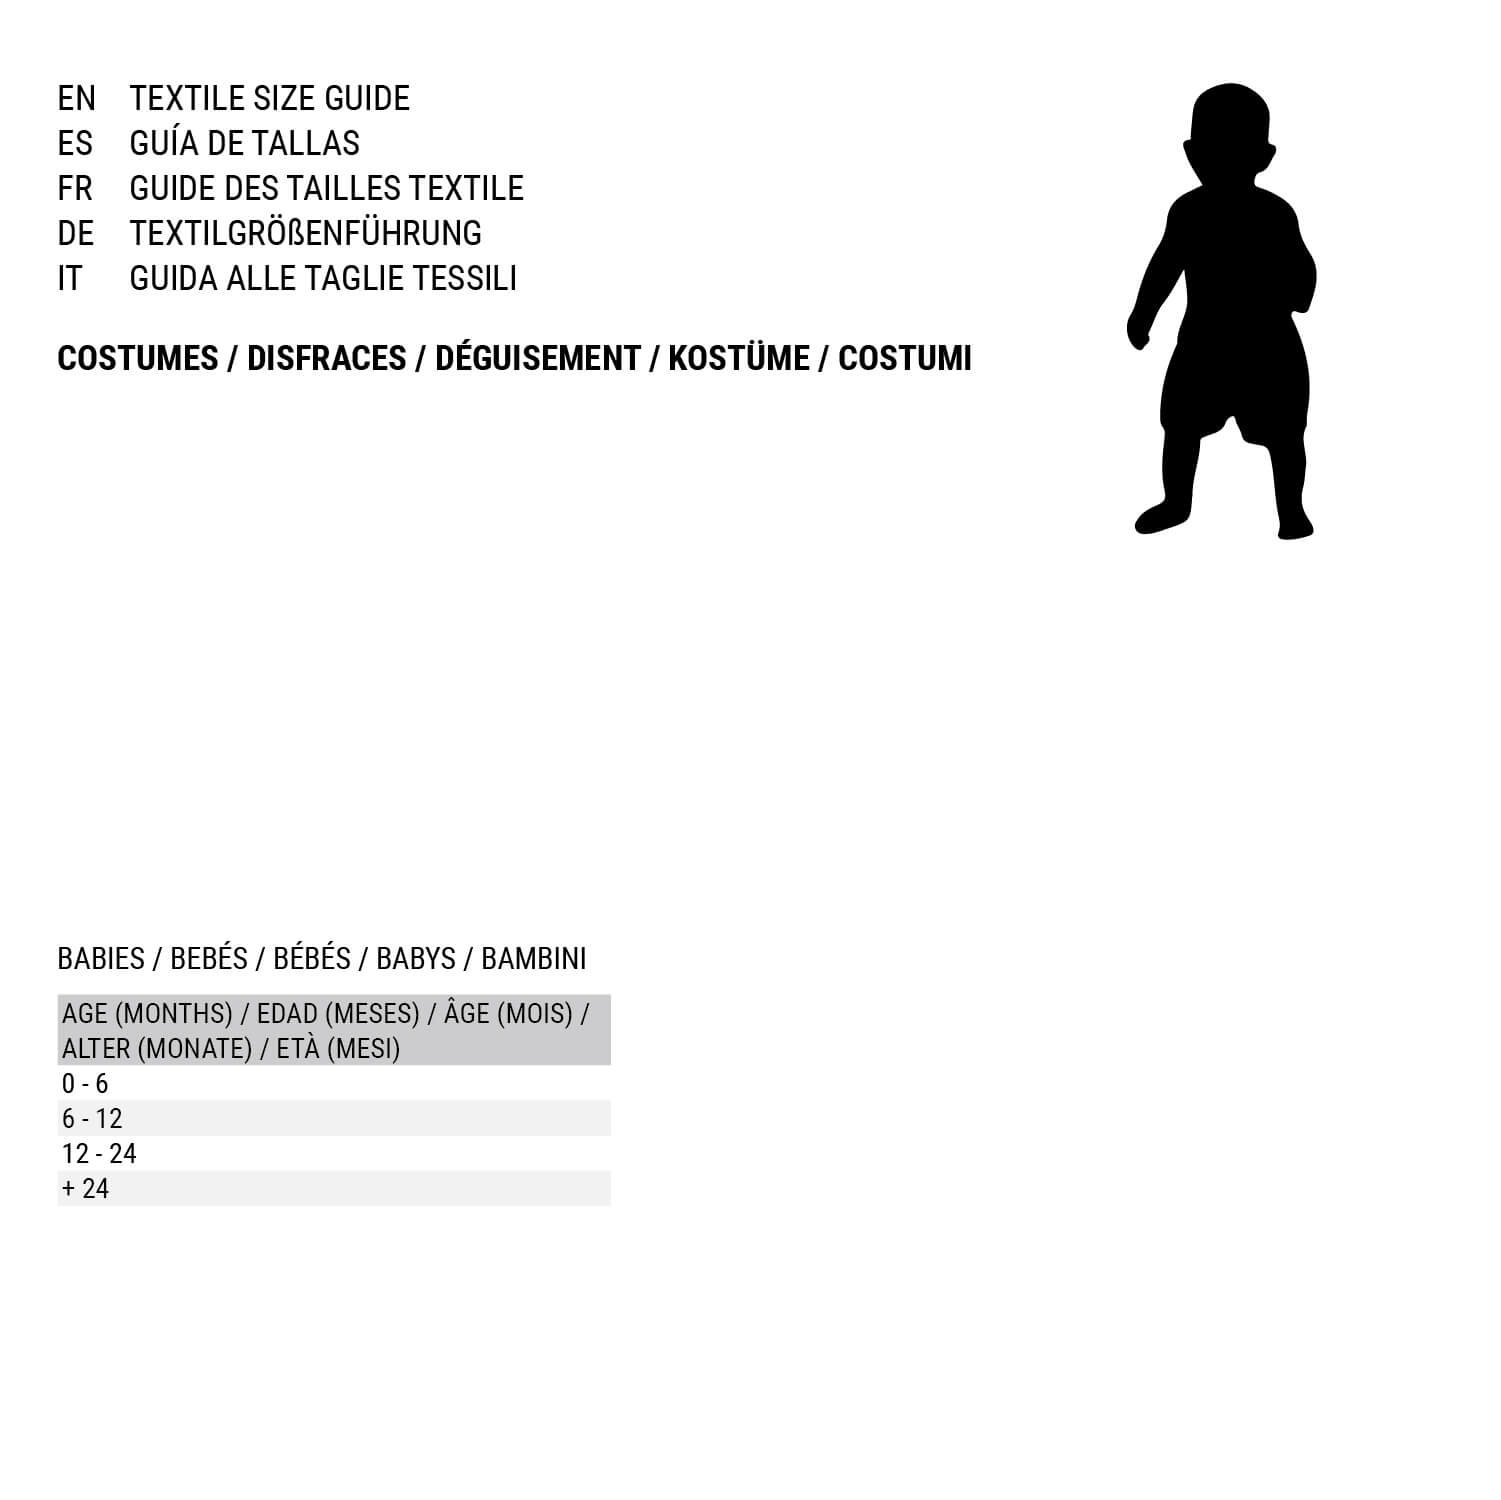 Costume for Children Male Demon (2 pcs)